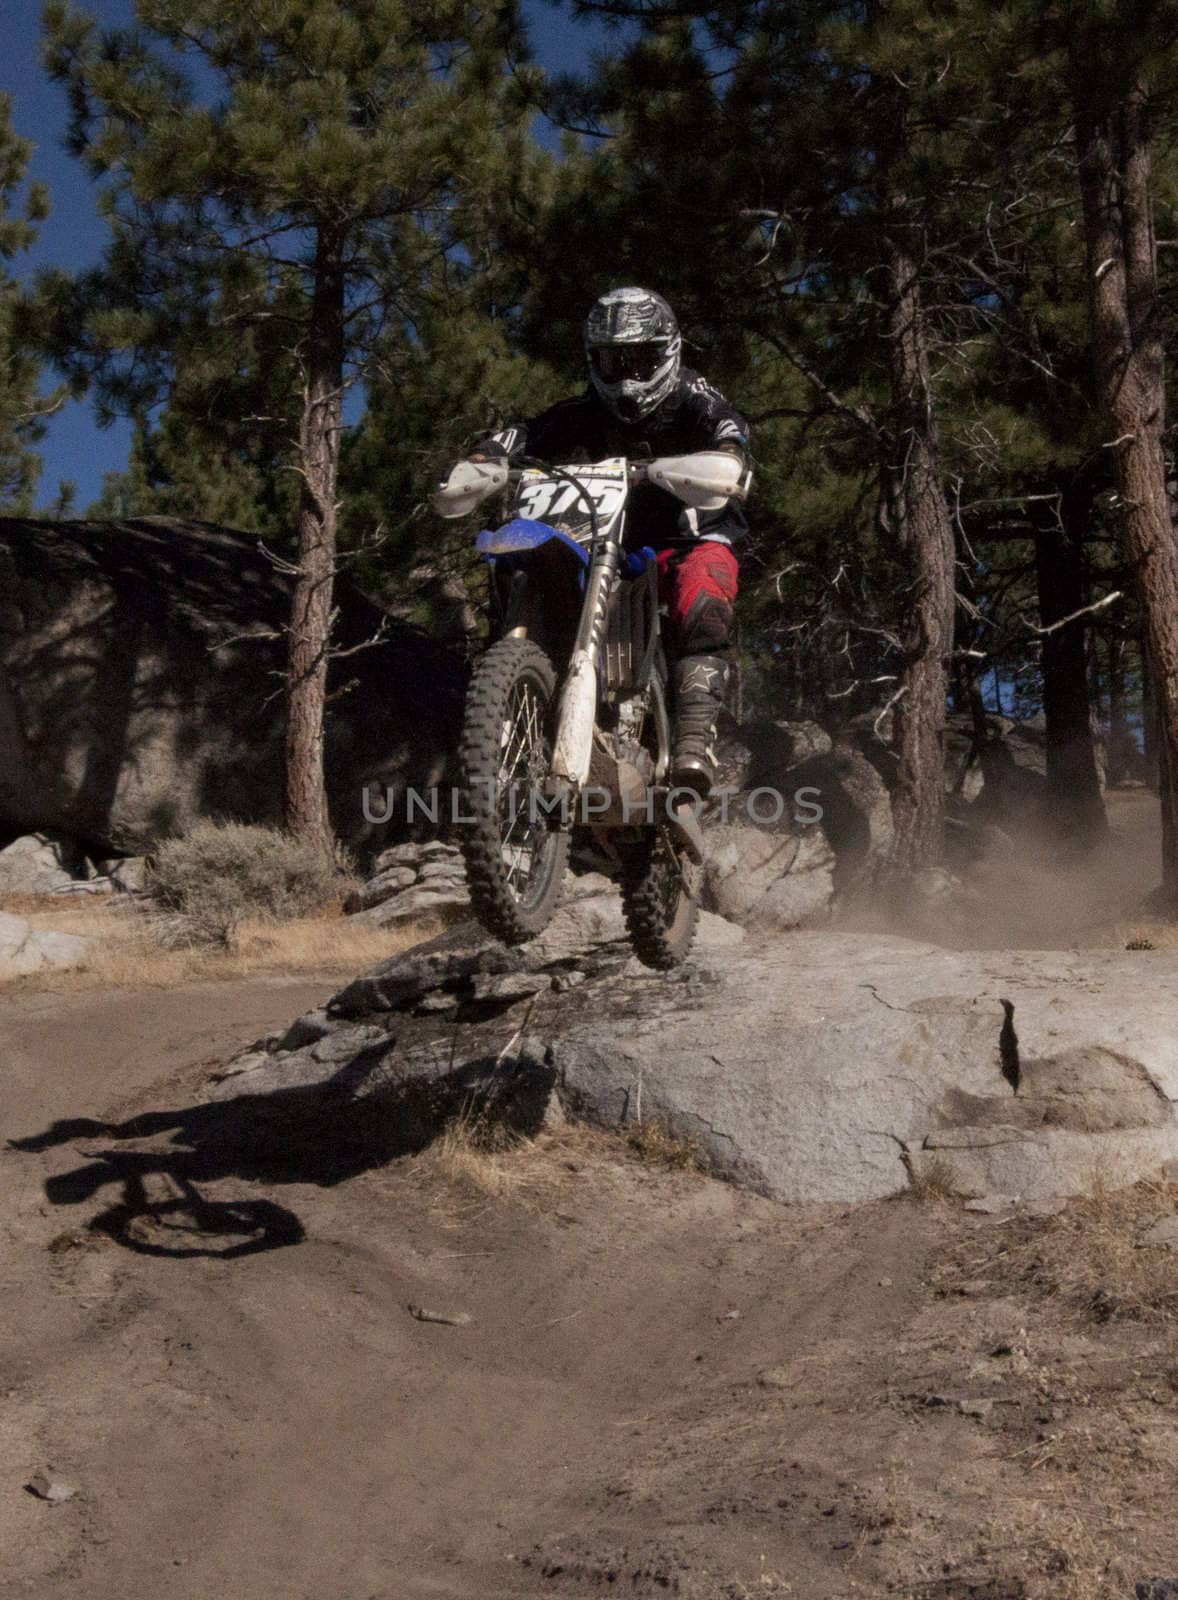 Singletrack dirt bike jumping in Verdi Nevada by jeremywhat